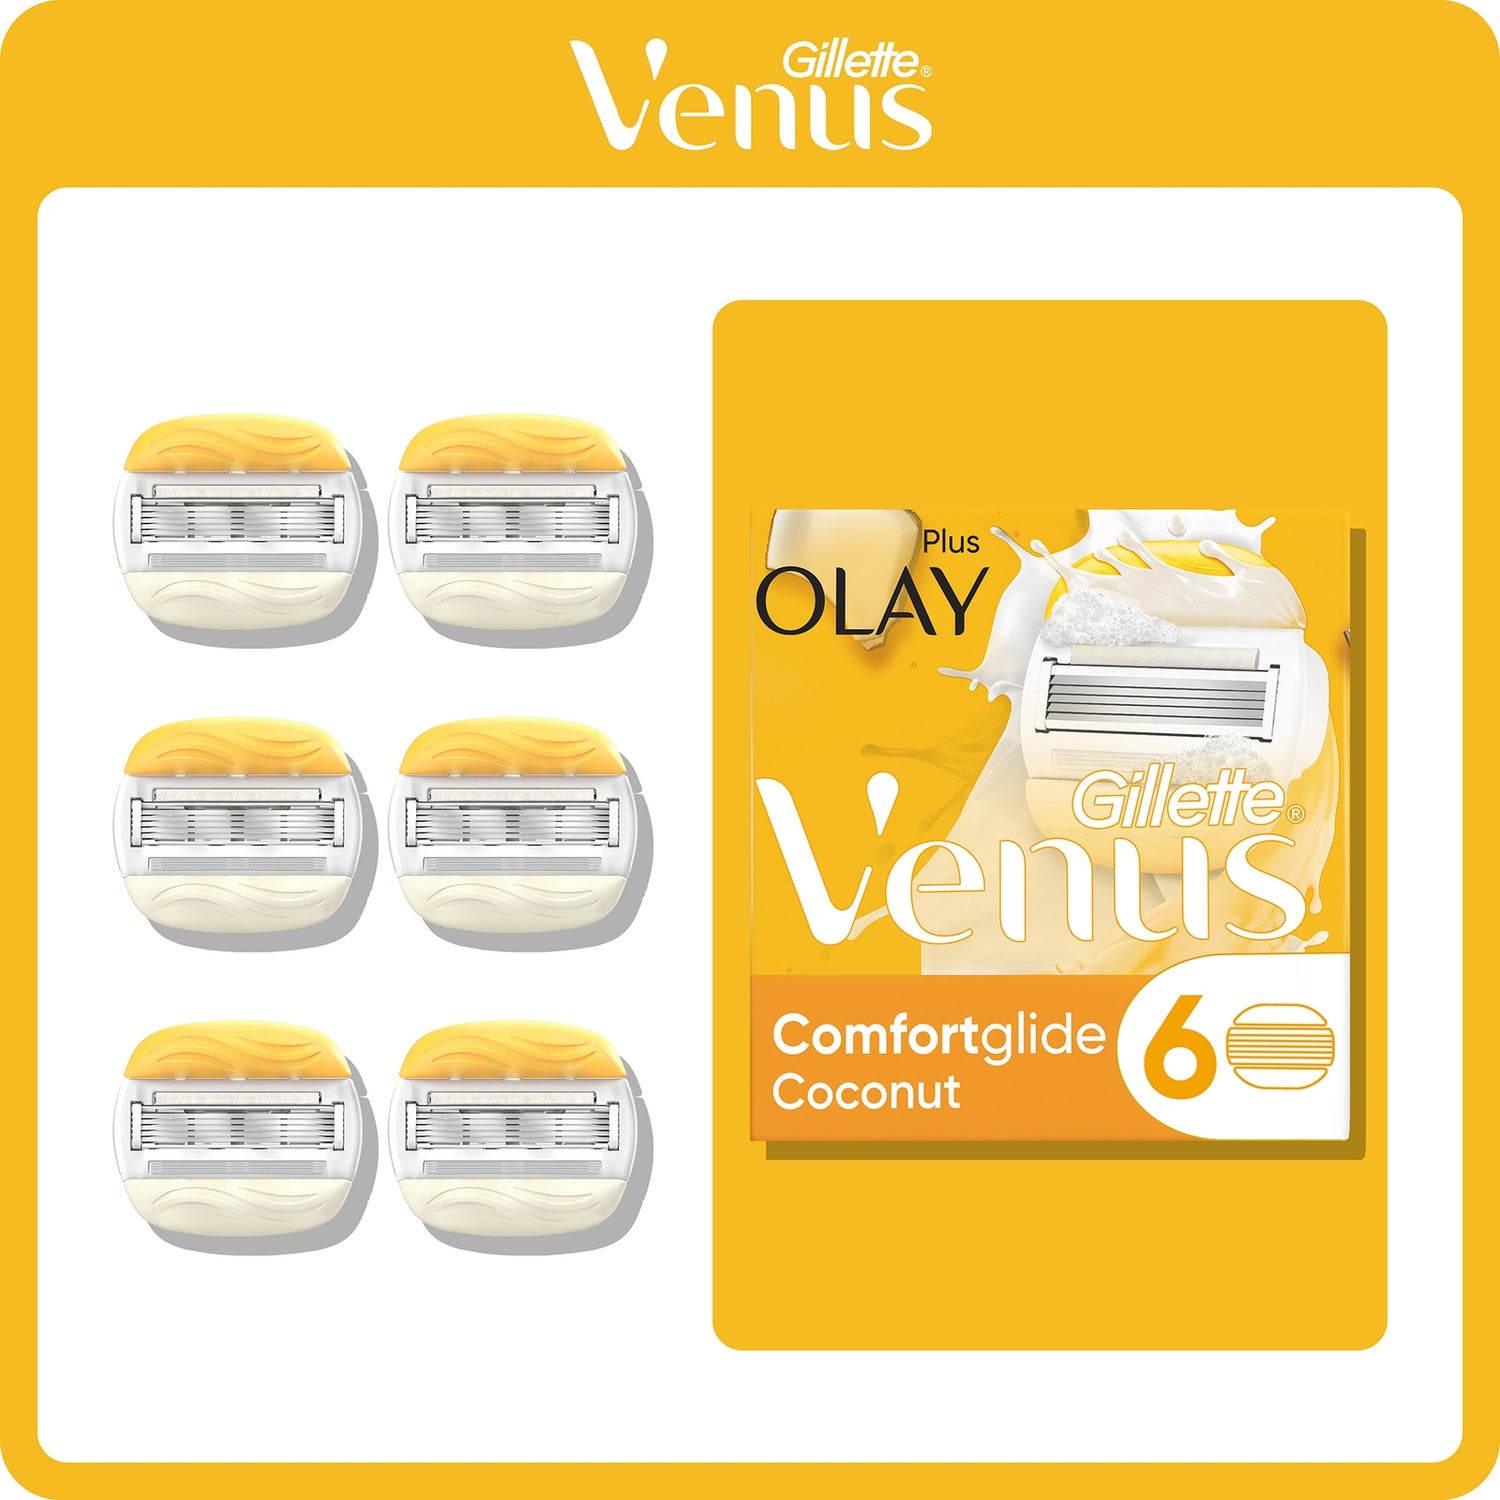 Venus ComfortGlide Coconut With Olay Blades